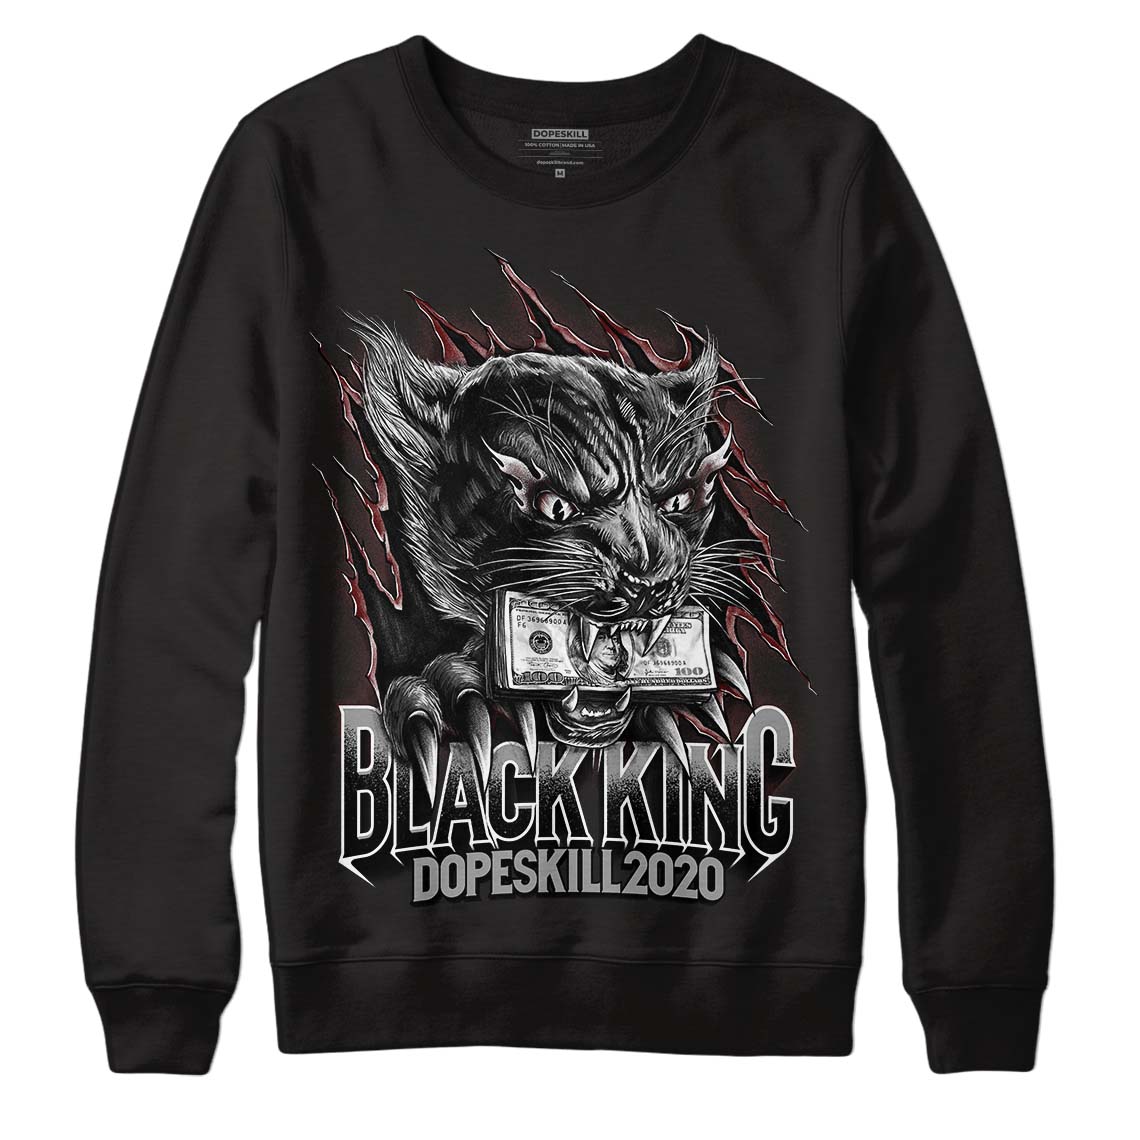 A Ma Maniére X 12S Dopeskill Sweatshirt Black King Graphic